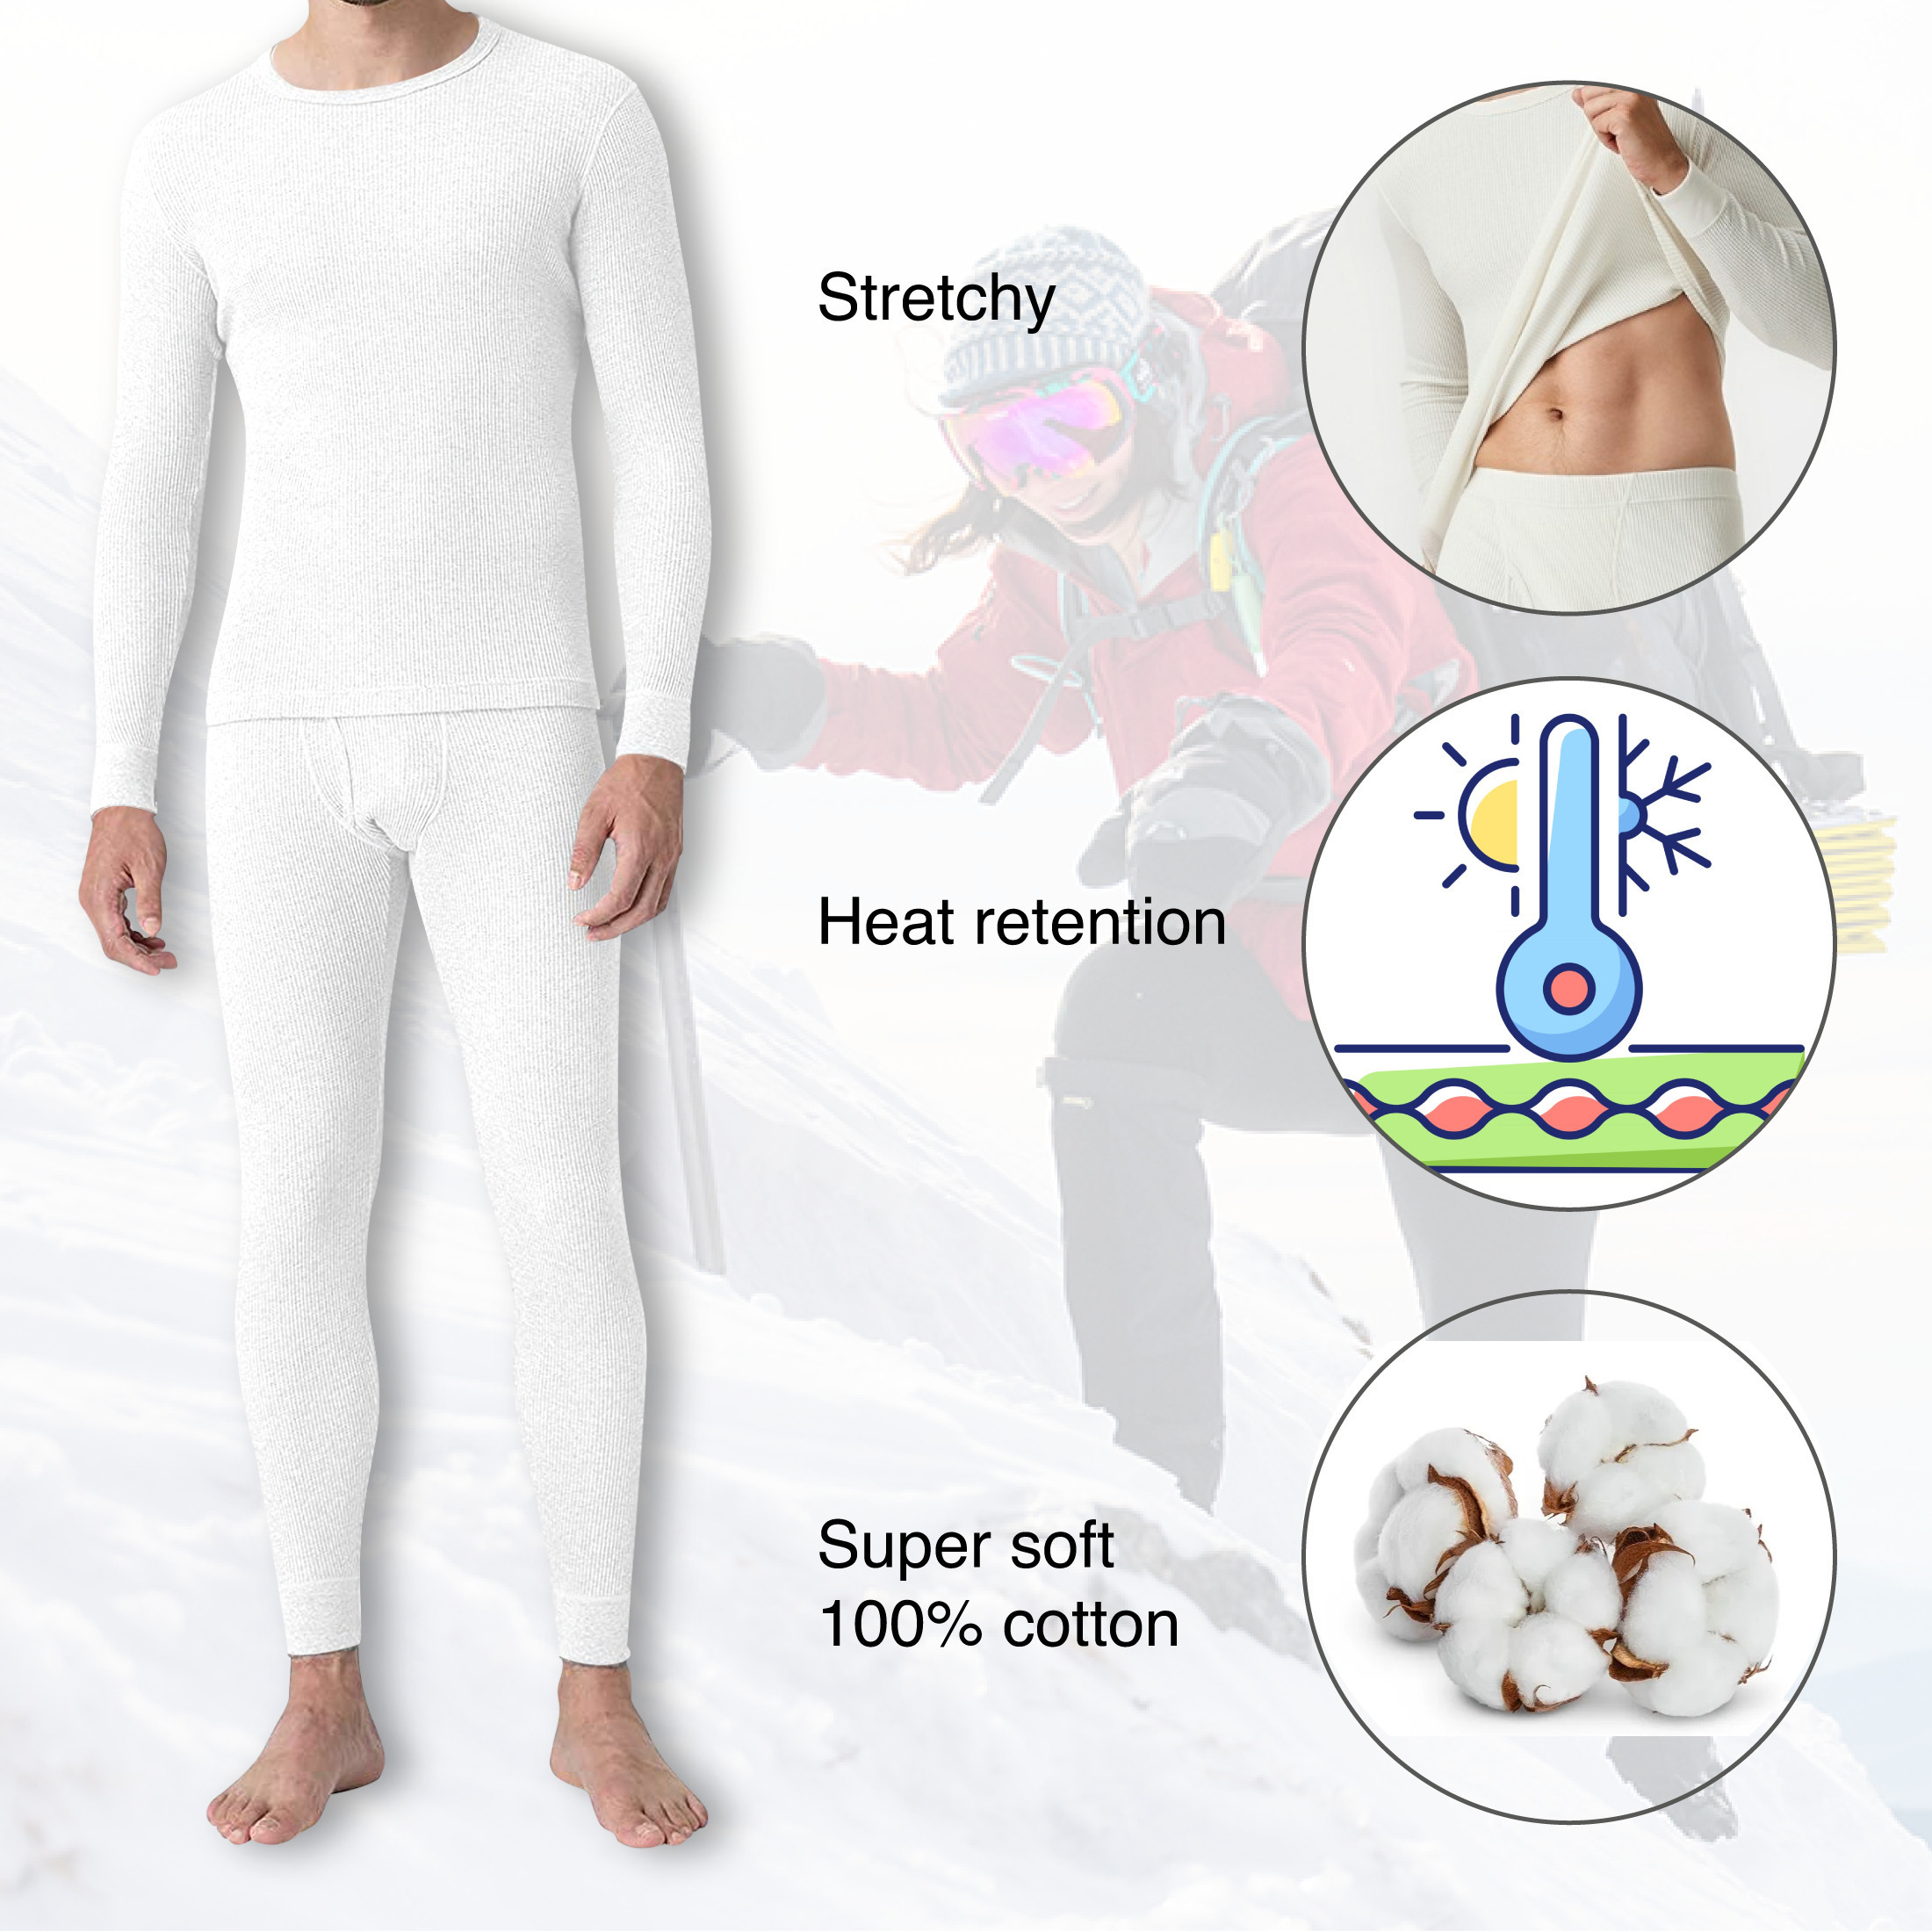 2-Sets: Men's Super Soft Cotton Waffle Knit Winter Thermal Underwear Set - Navy & Navy, Large